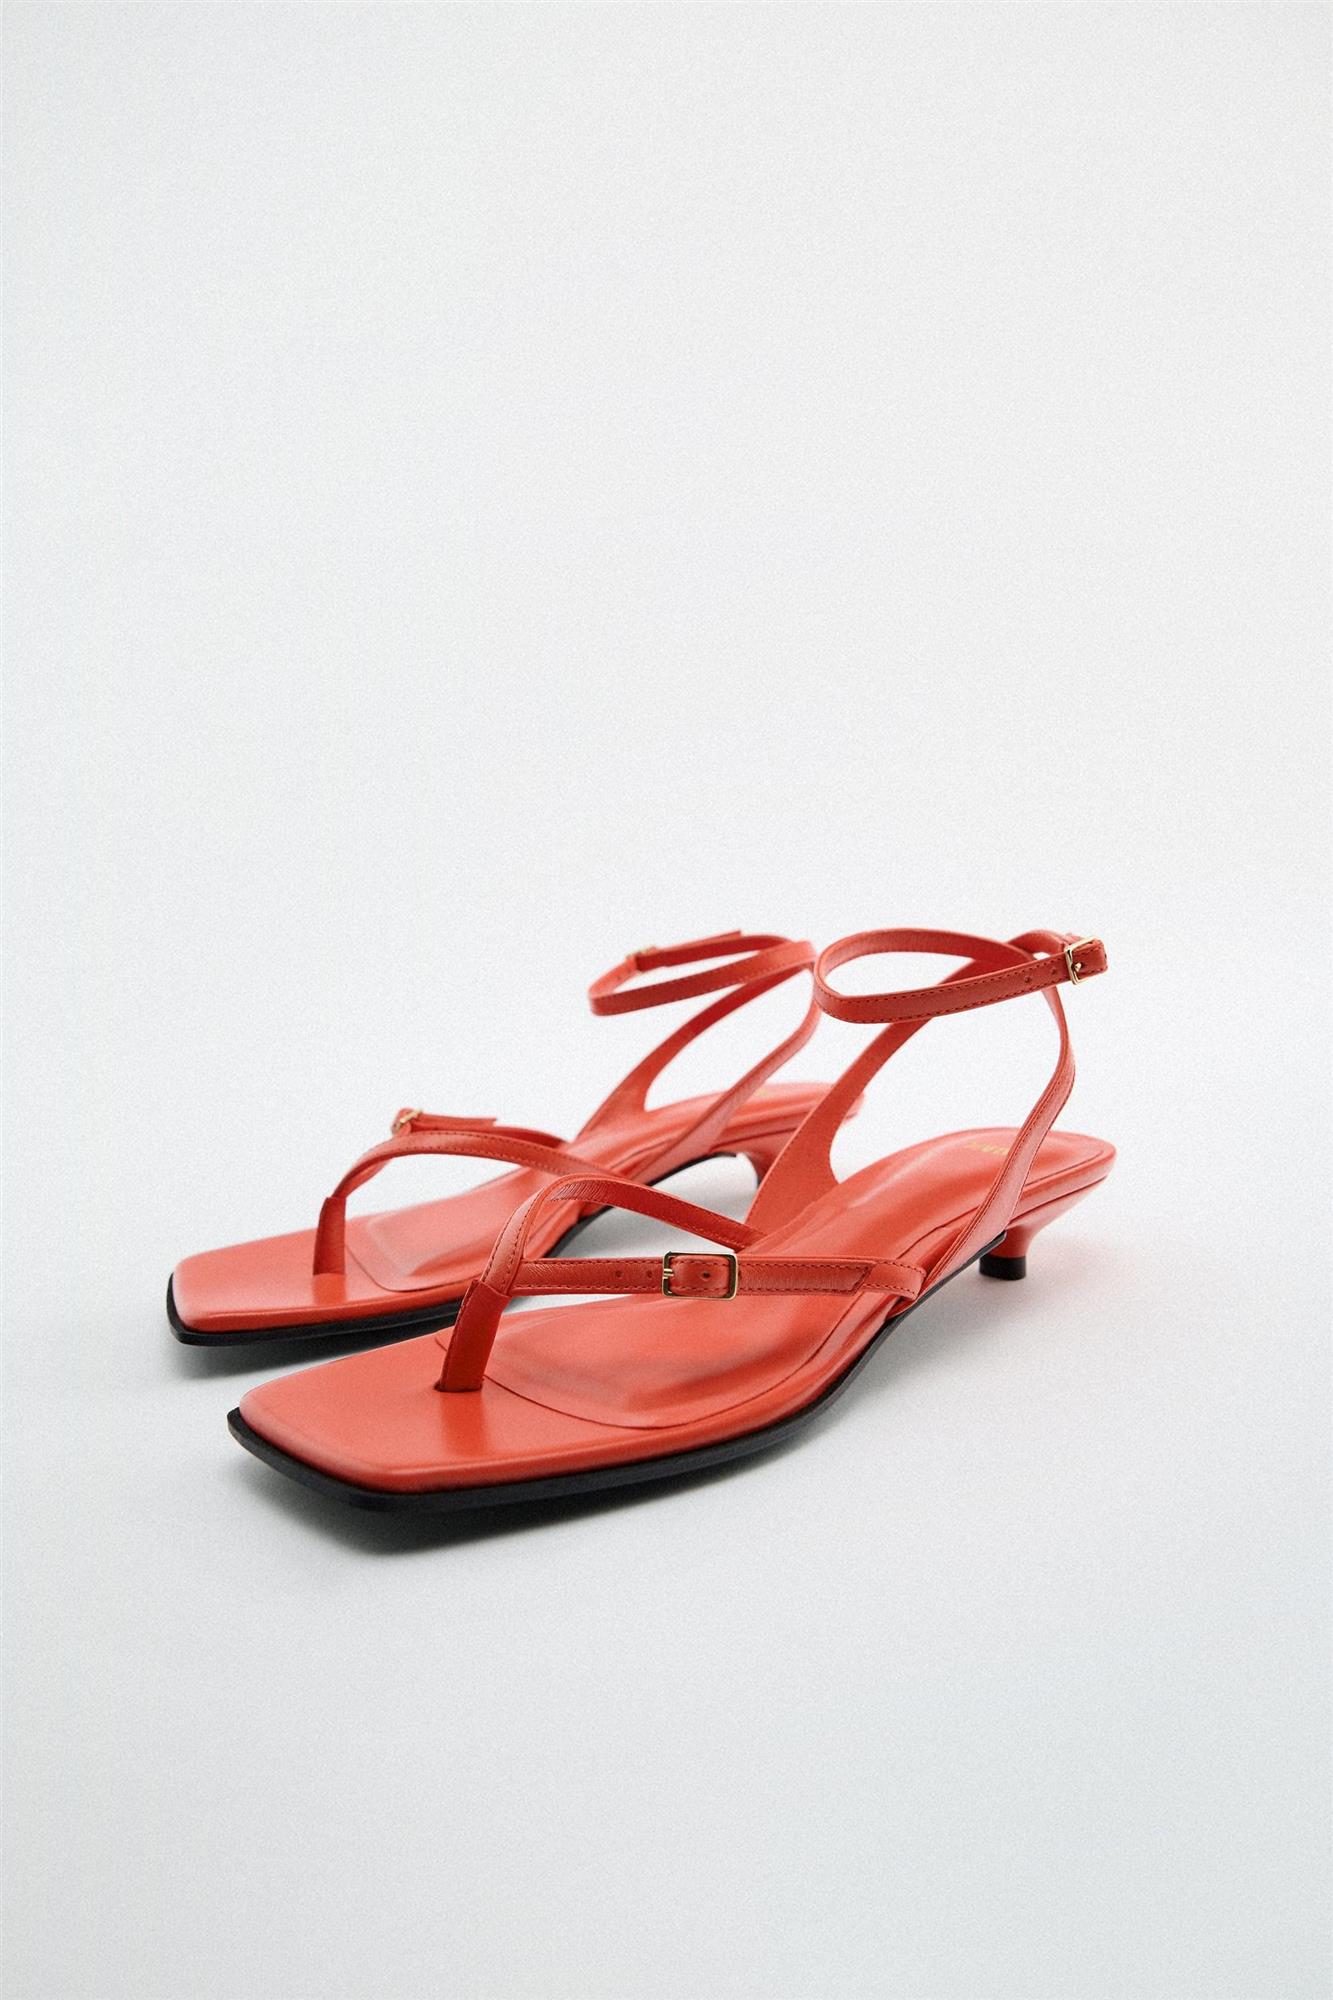 Rebajas Zara verano 2022, sandalias planas